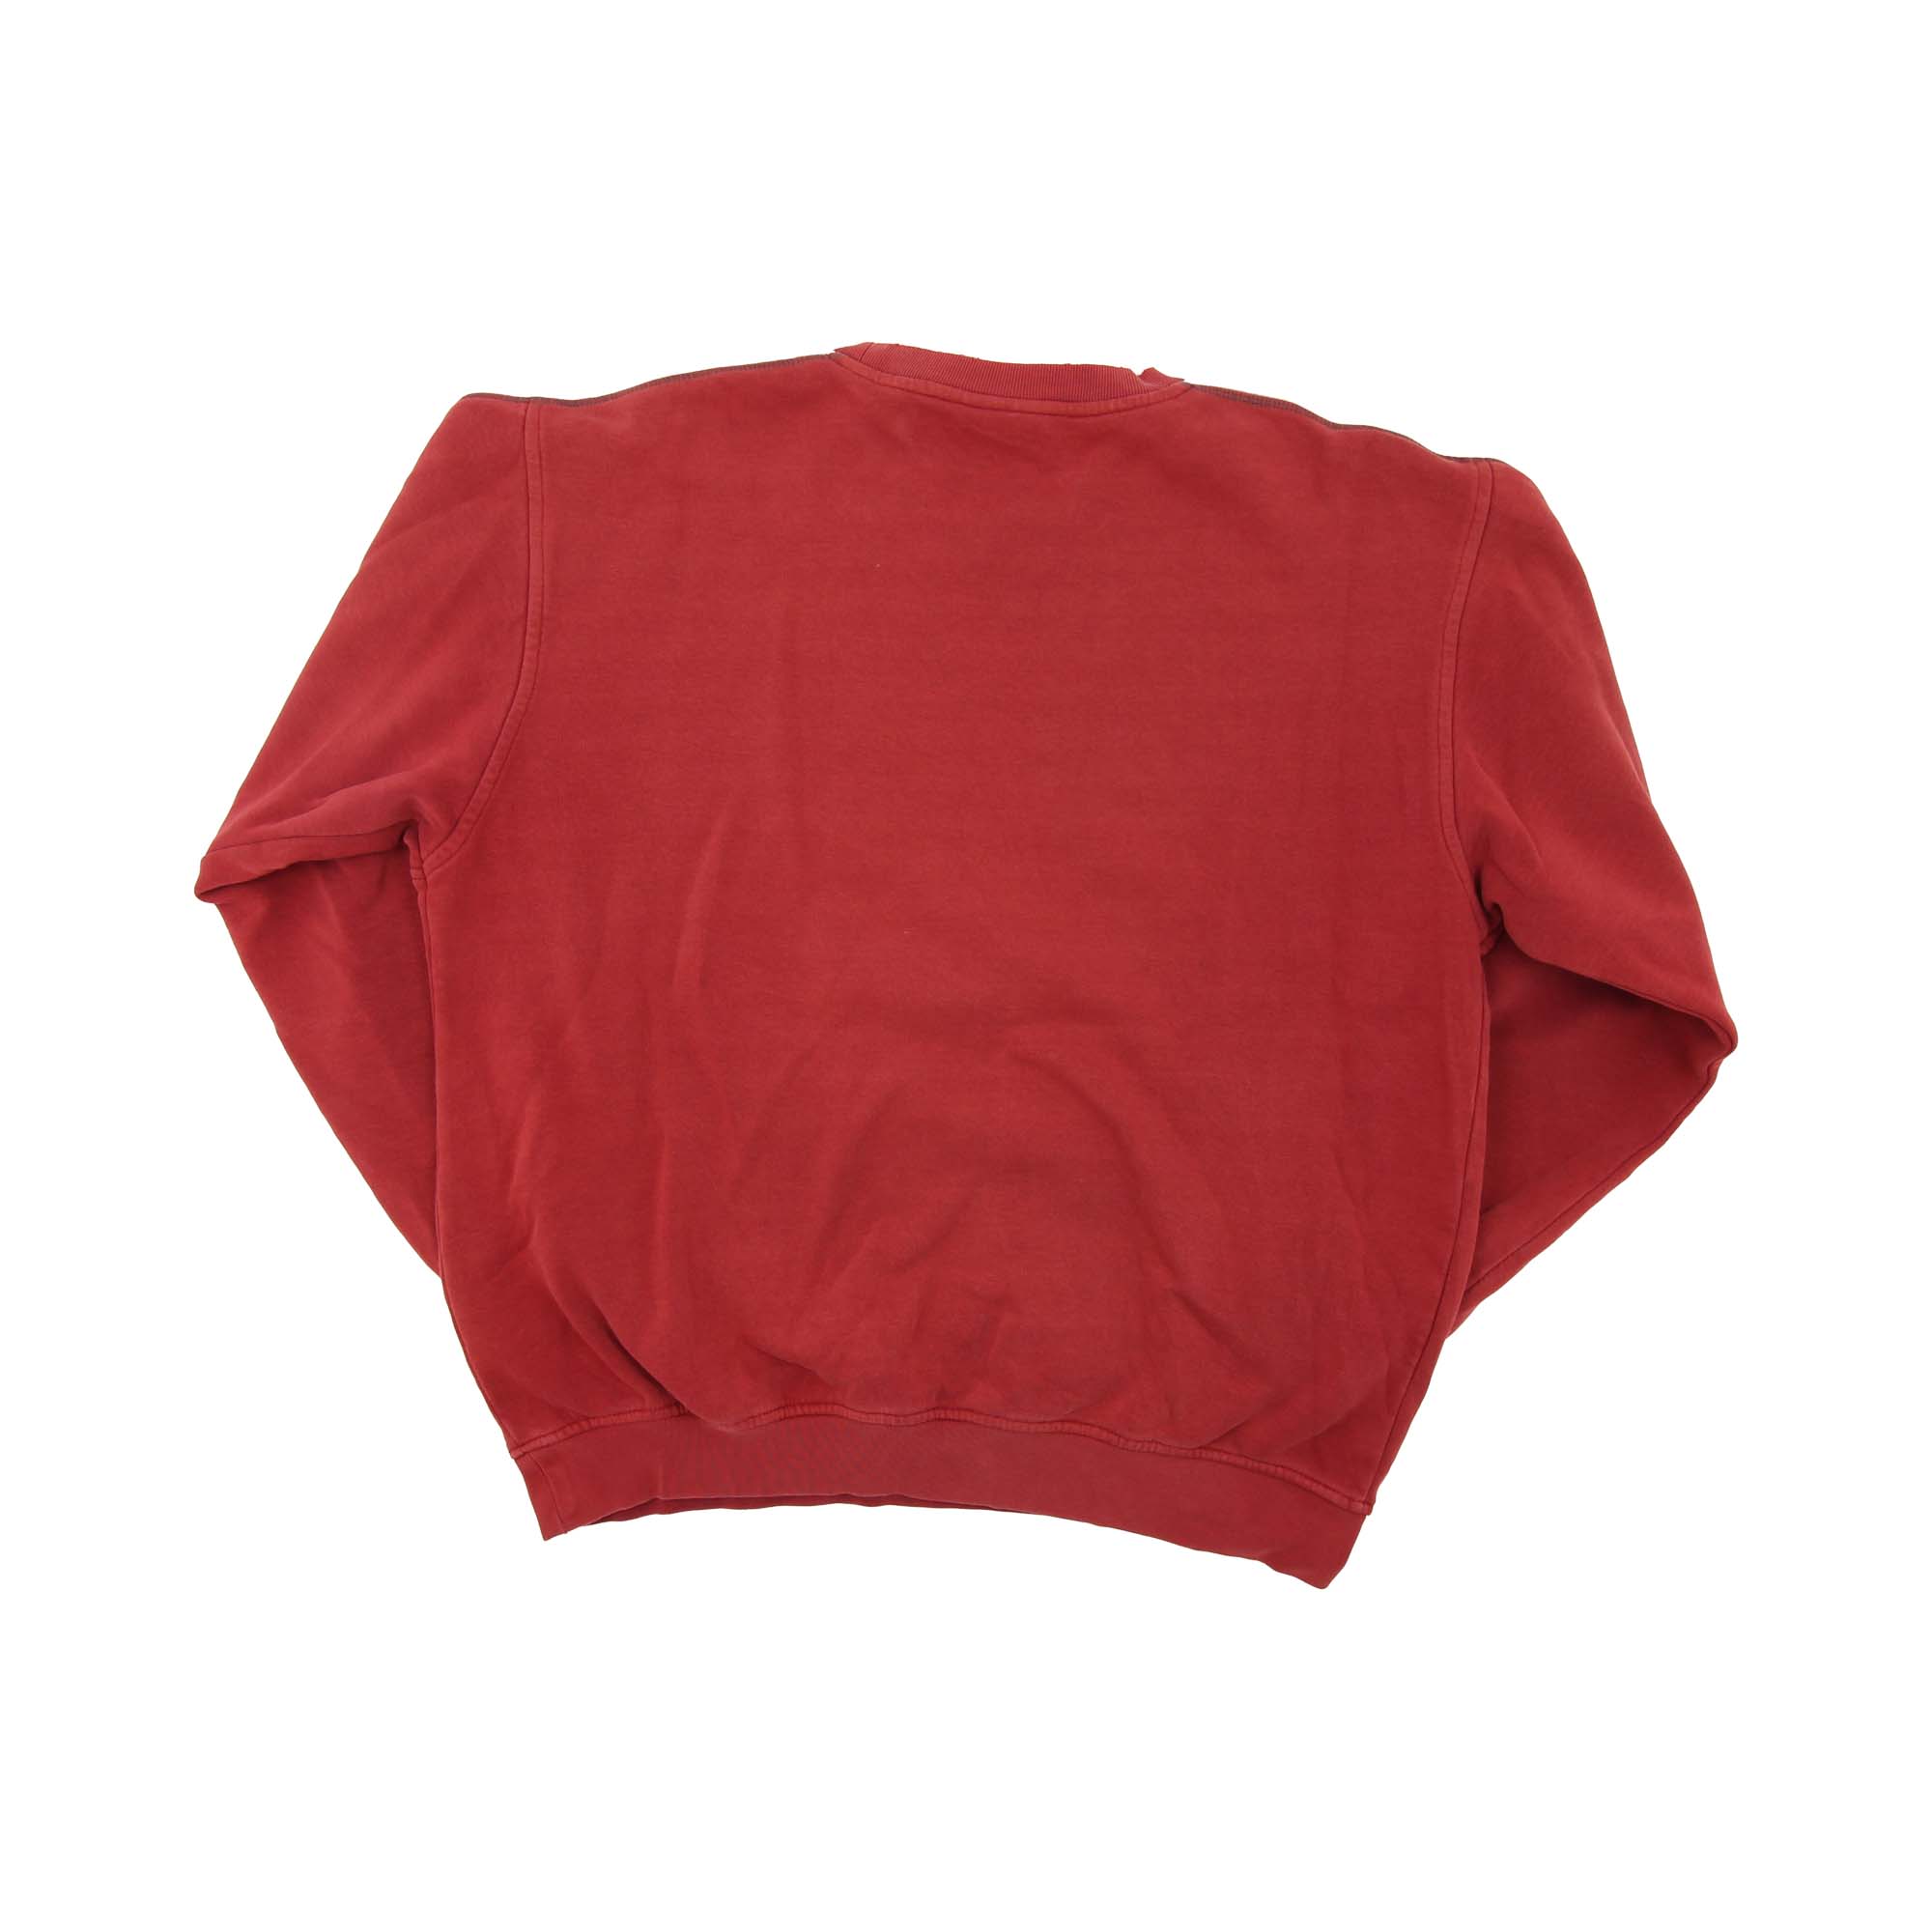 Lotto Sweatshirt Red  -   XL